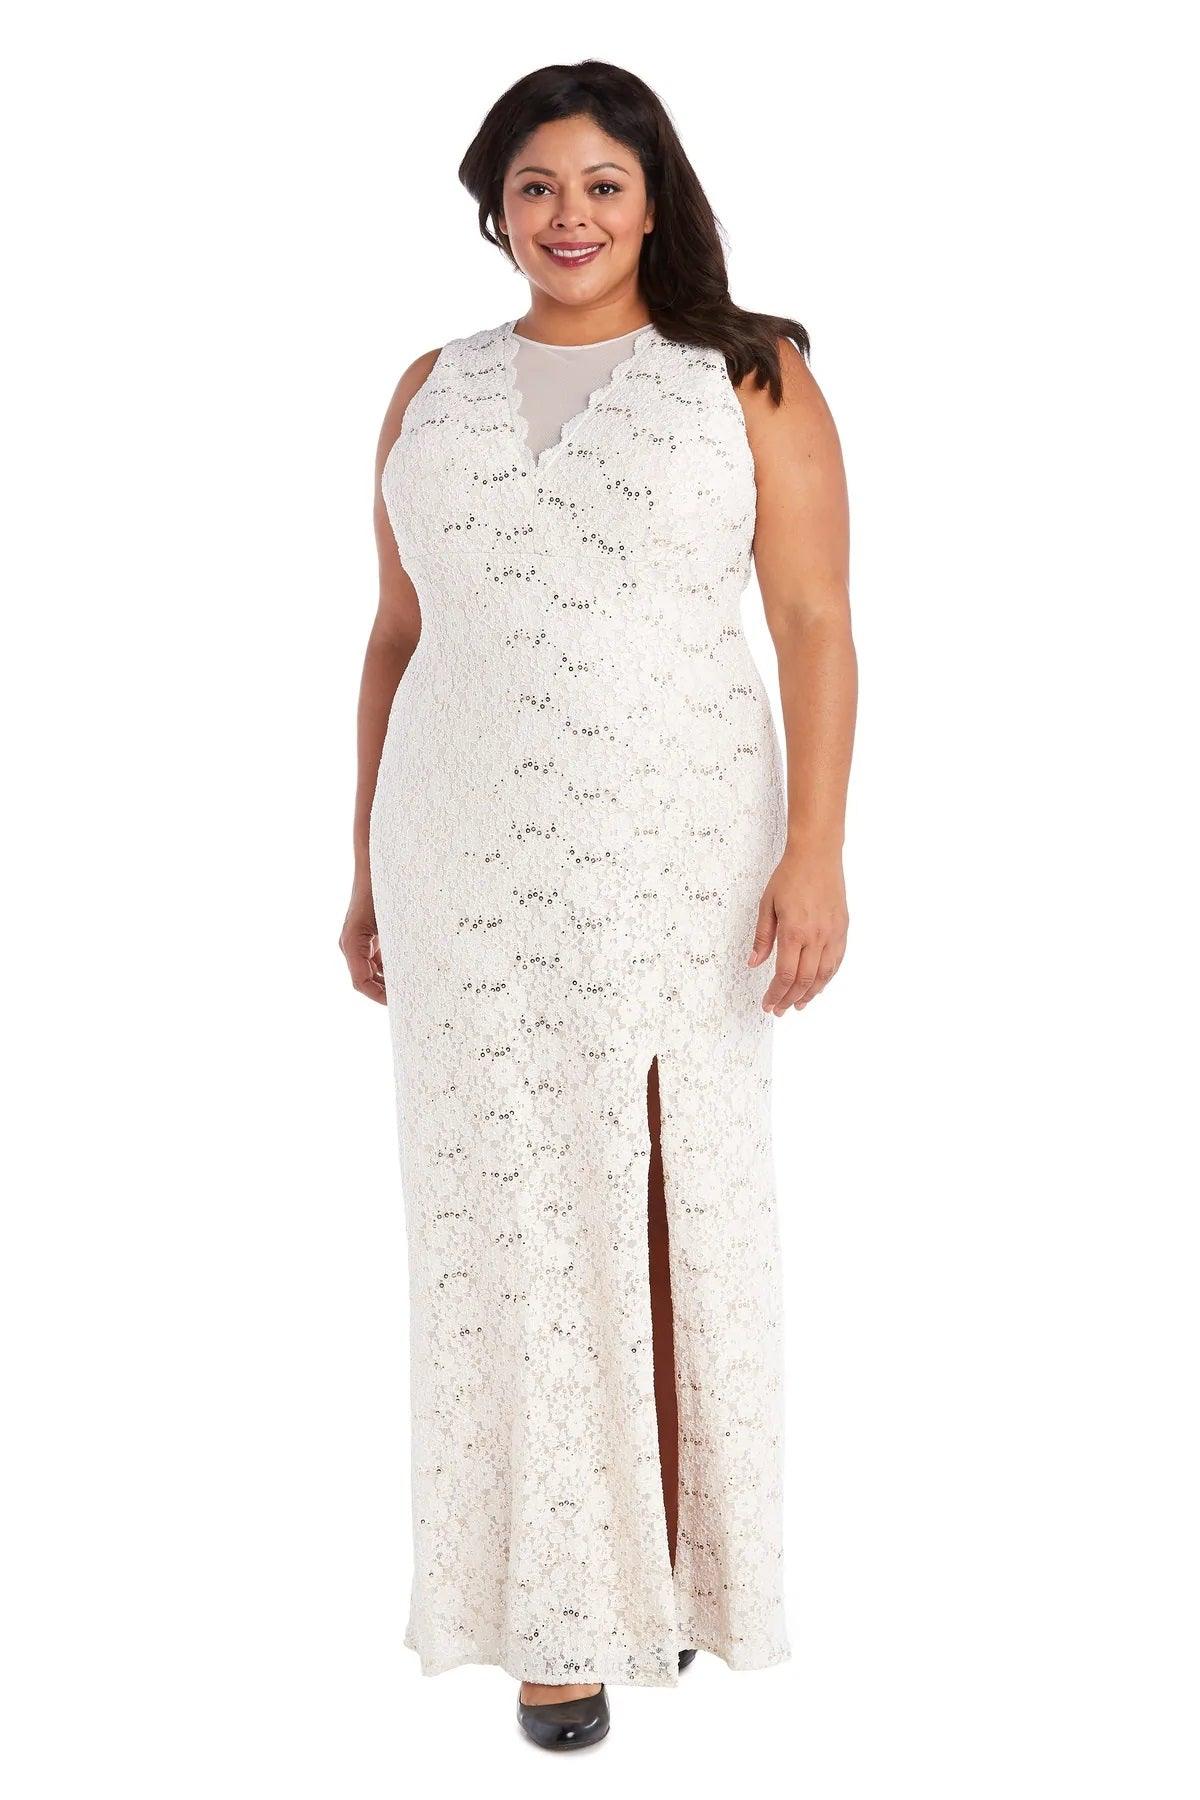 Nightway Long Plus Size Glitter Lace Dress 21547W - The Dress Outlet